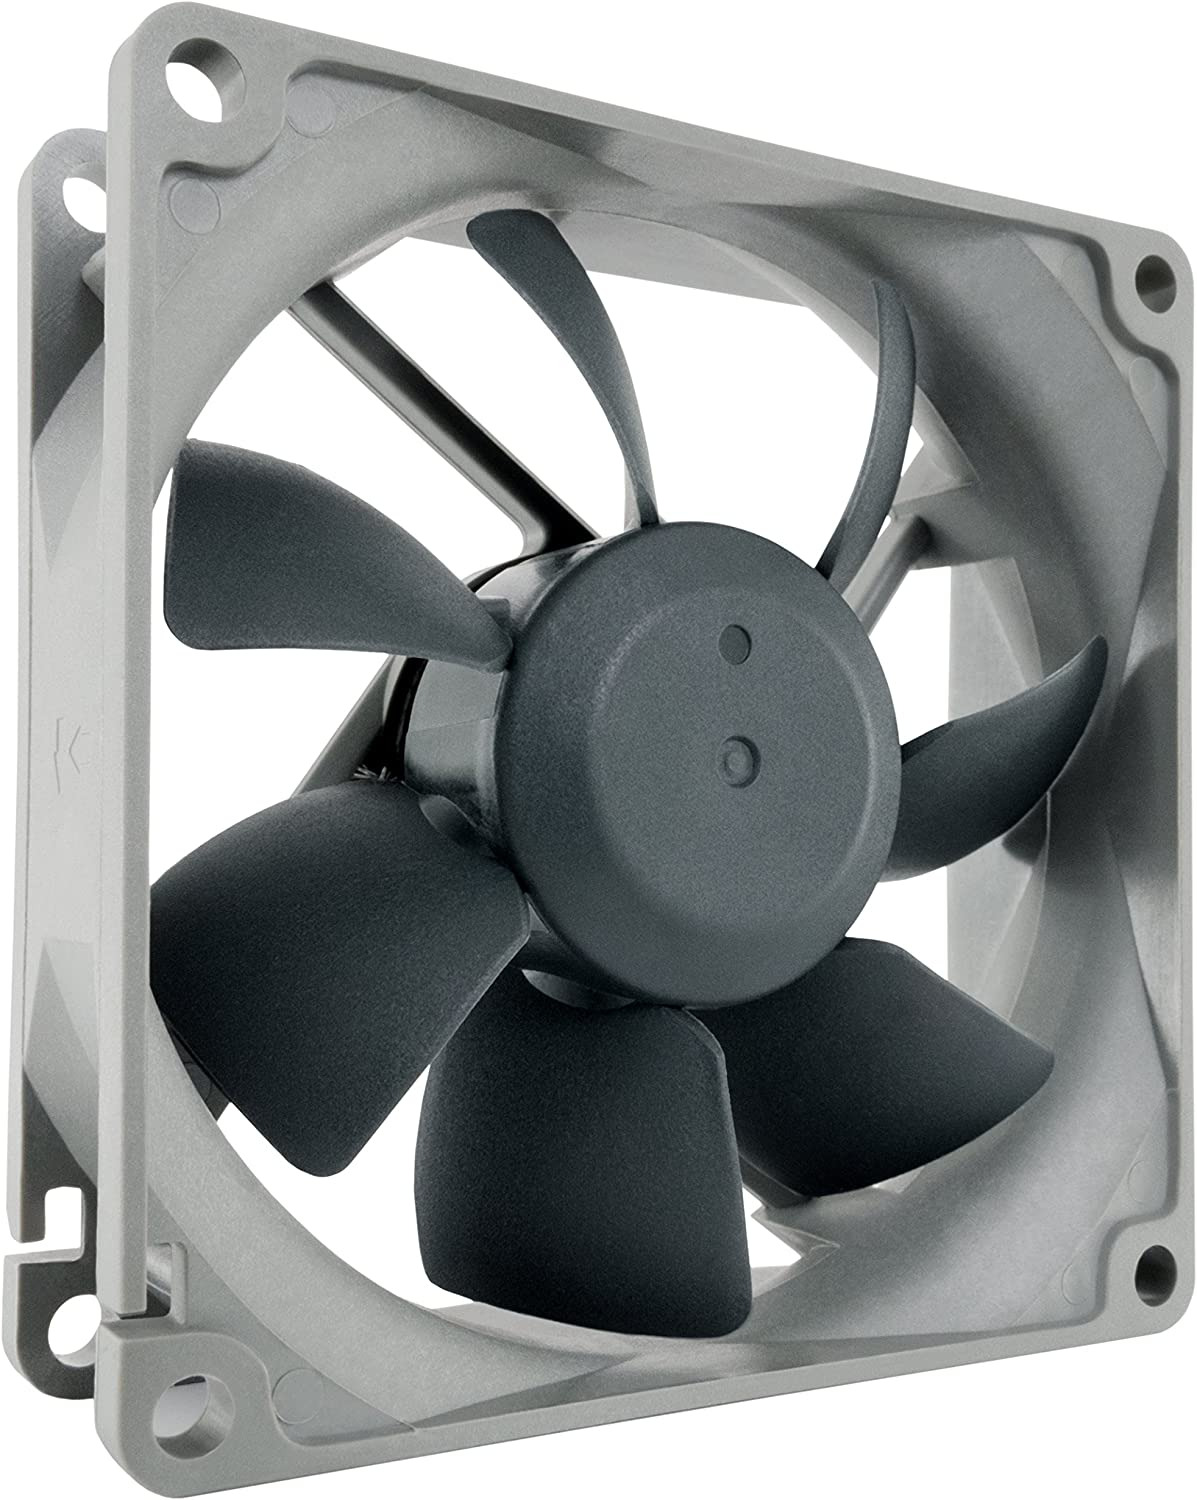 NF-R8 Redux-1200, Ultra Quiet Silent Fan, 3-Pin, 1200 RPM (80Mm, Grey)